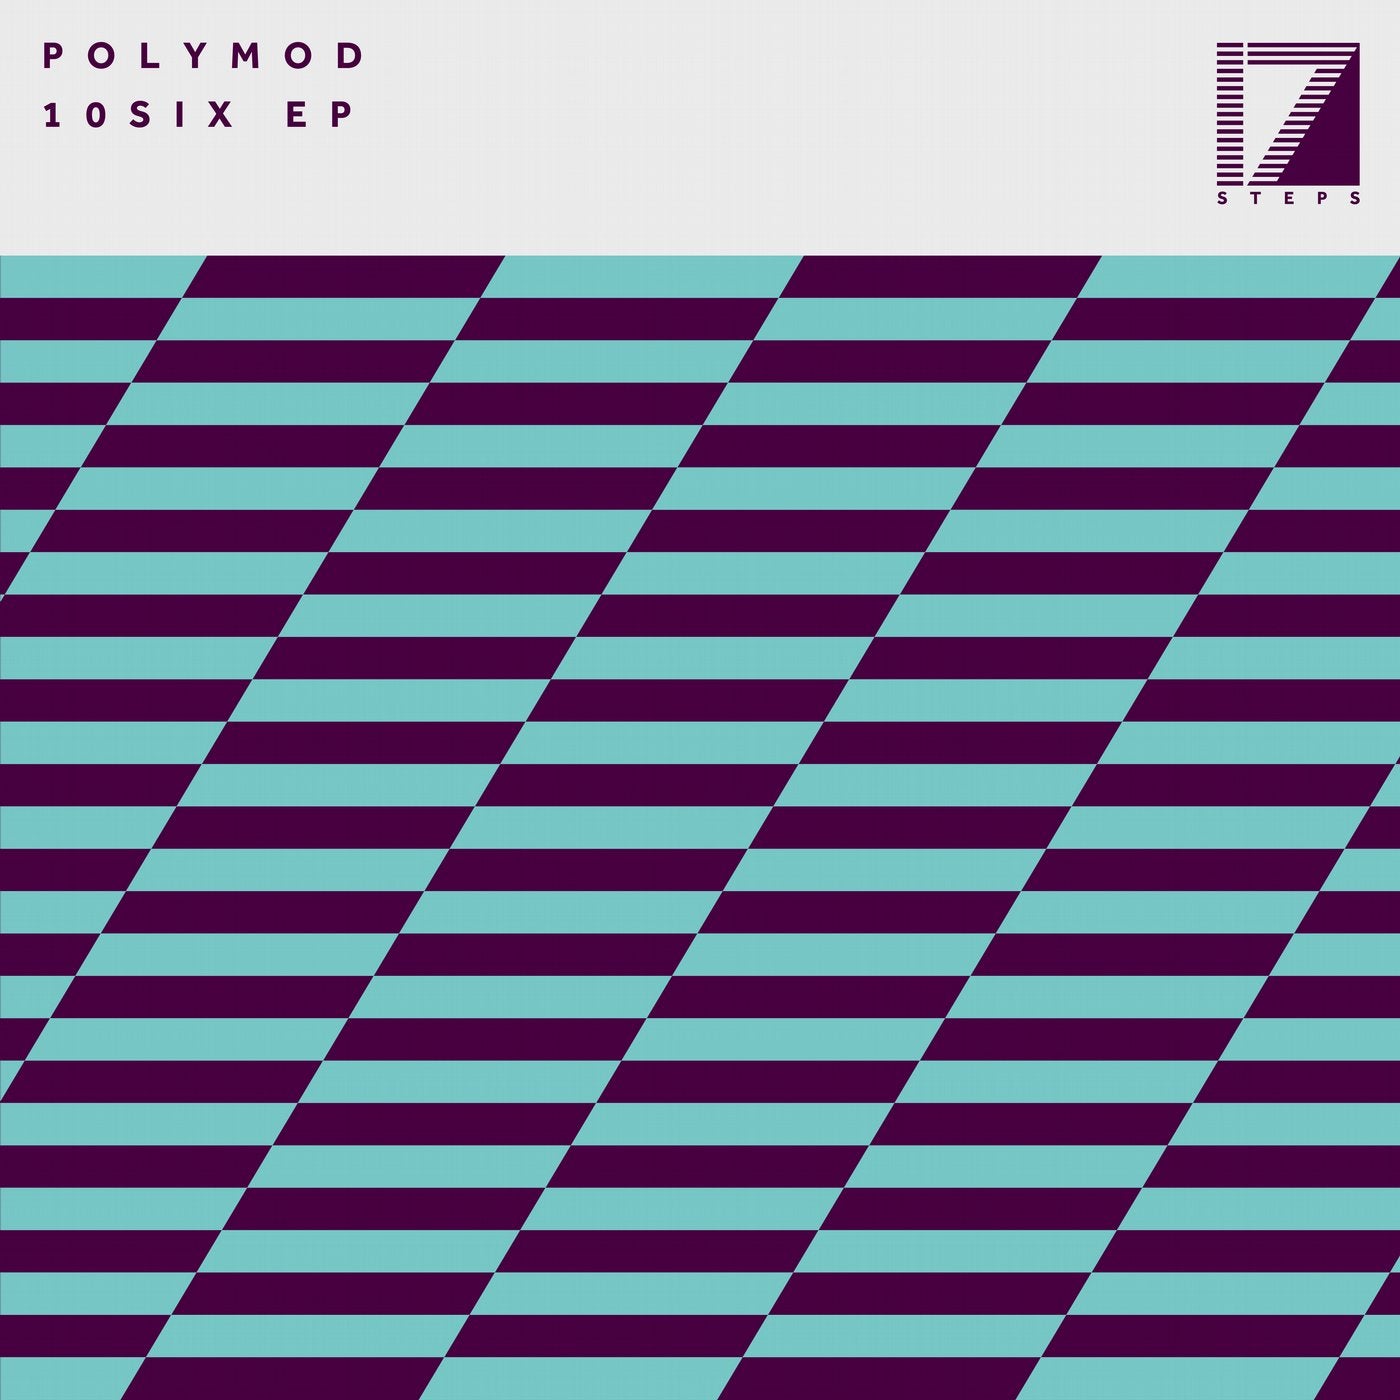 Polymod. 17 steps